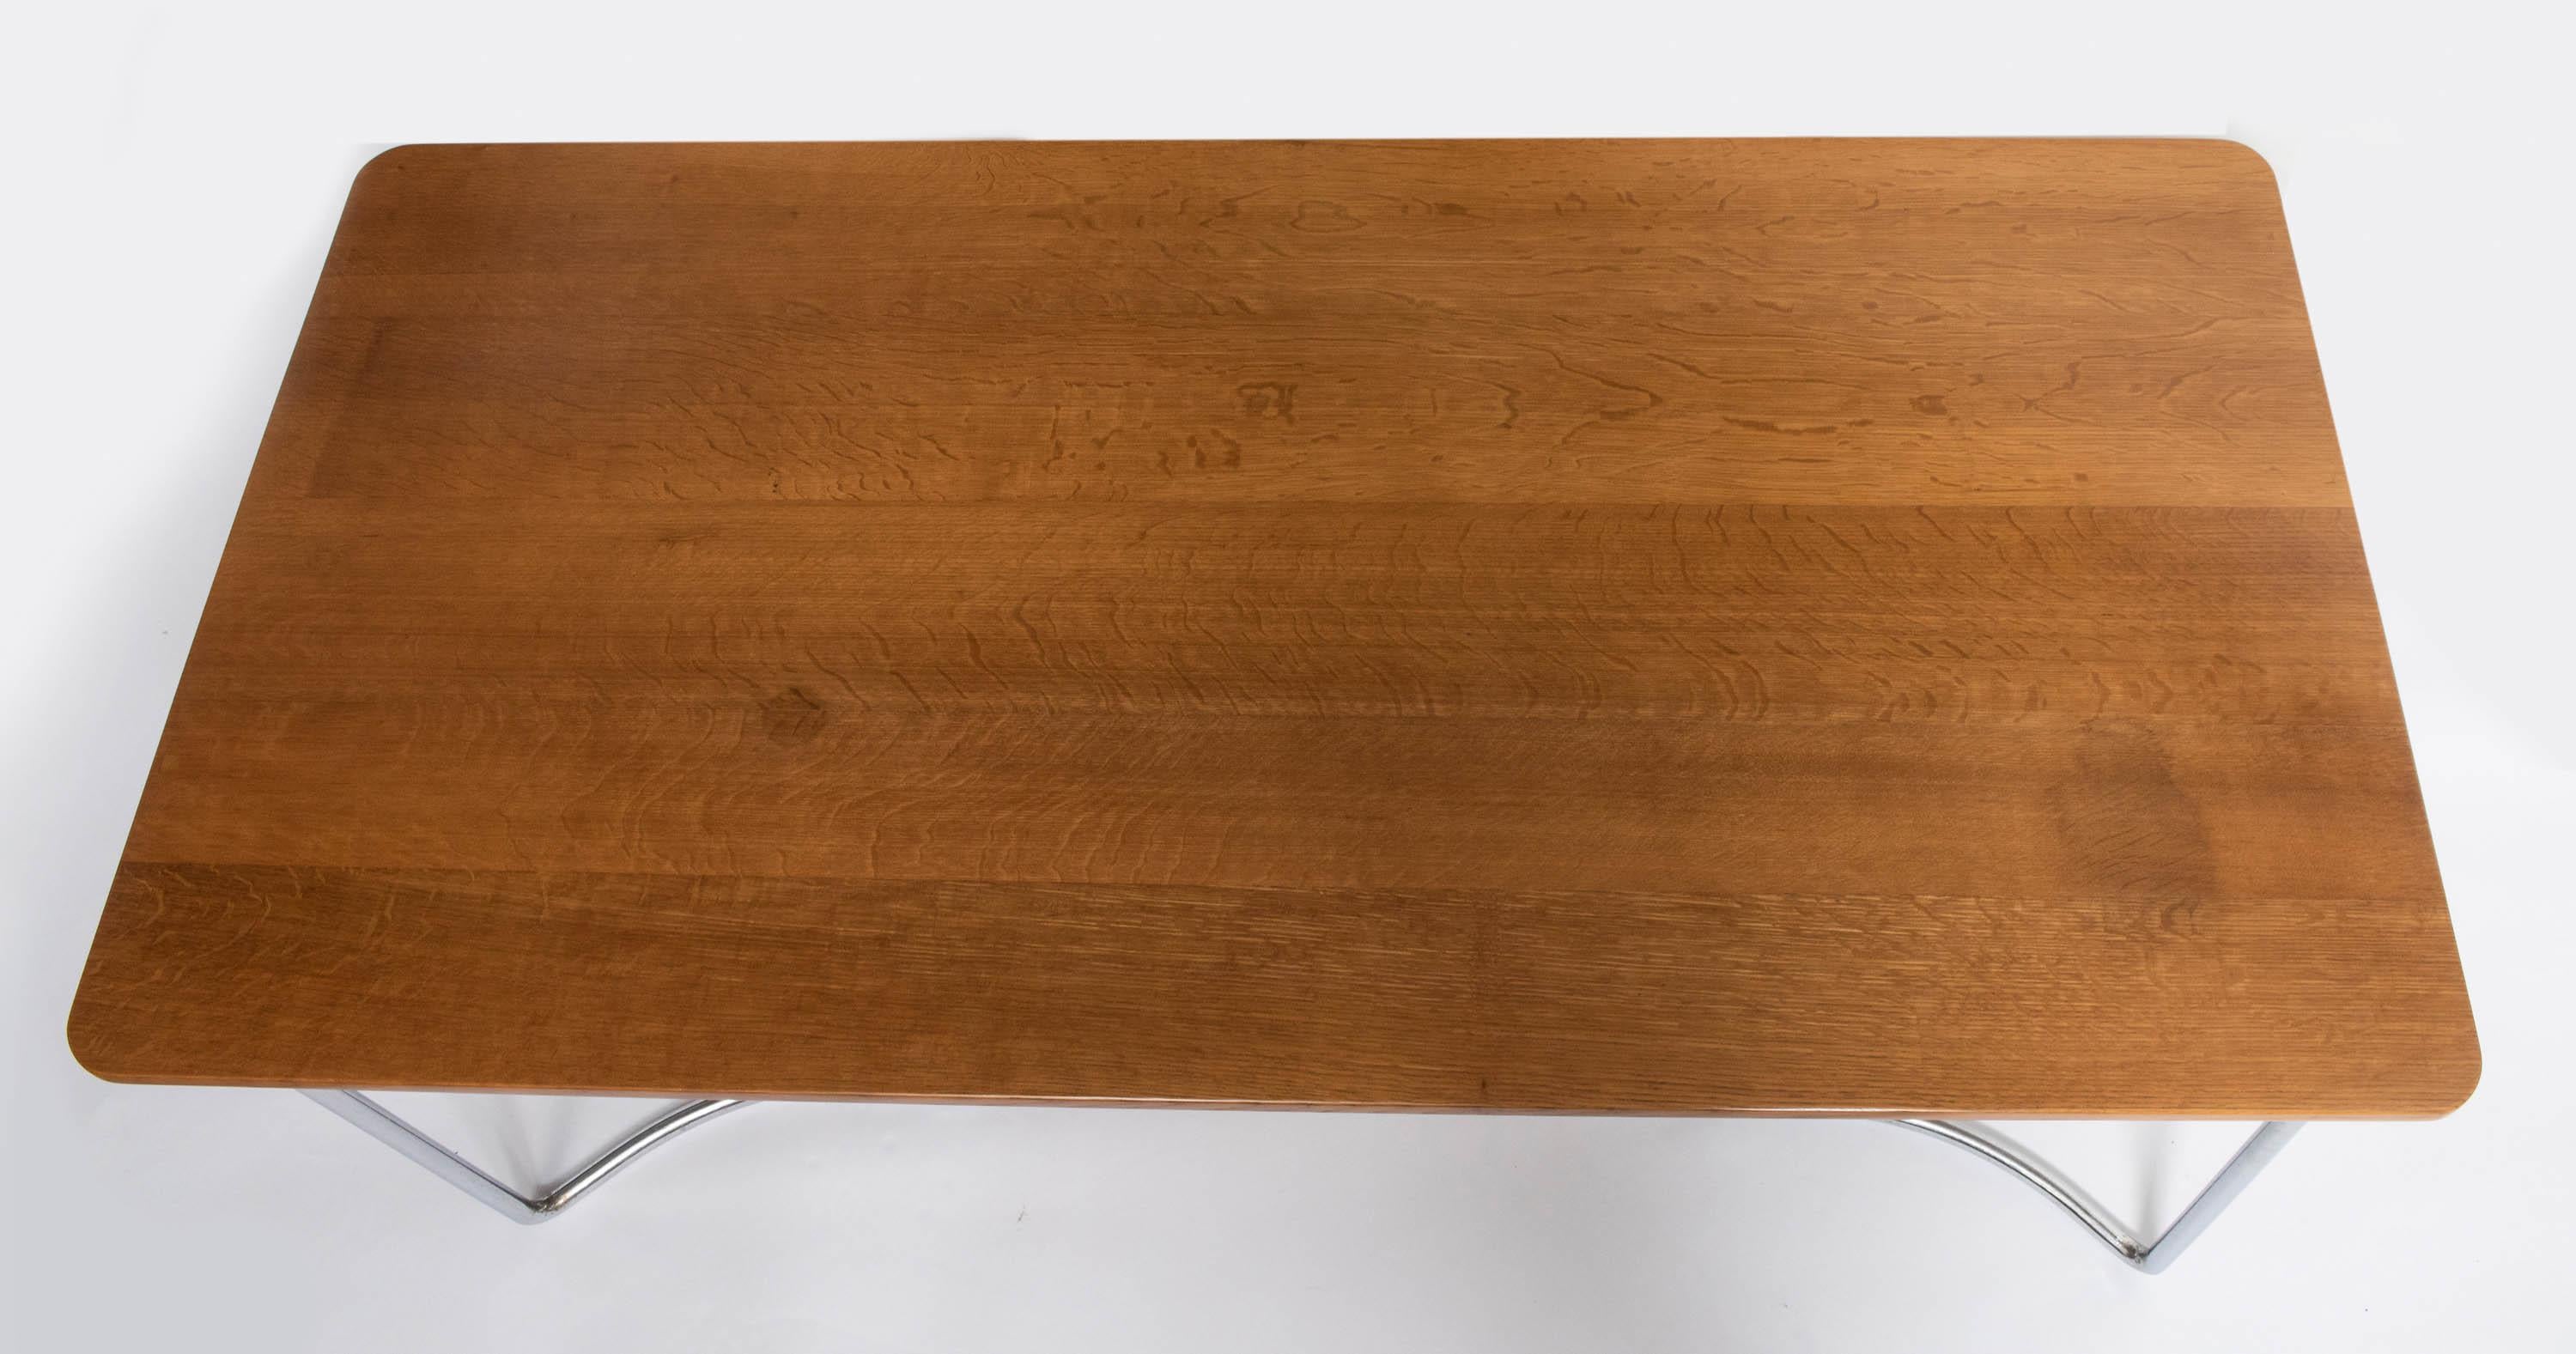 A rare P.E.L (Practical Equipment Limited) British modernist dining table.
Model no. HT11.
Designed by the designer/ architect Oliver Bernard.
Oak veneered plywood top of rectangular shape.
Raised on tubular chrome-plated steel frame.
England,